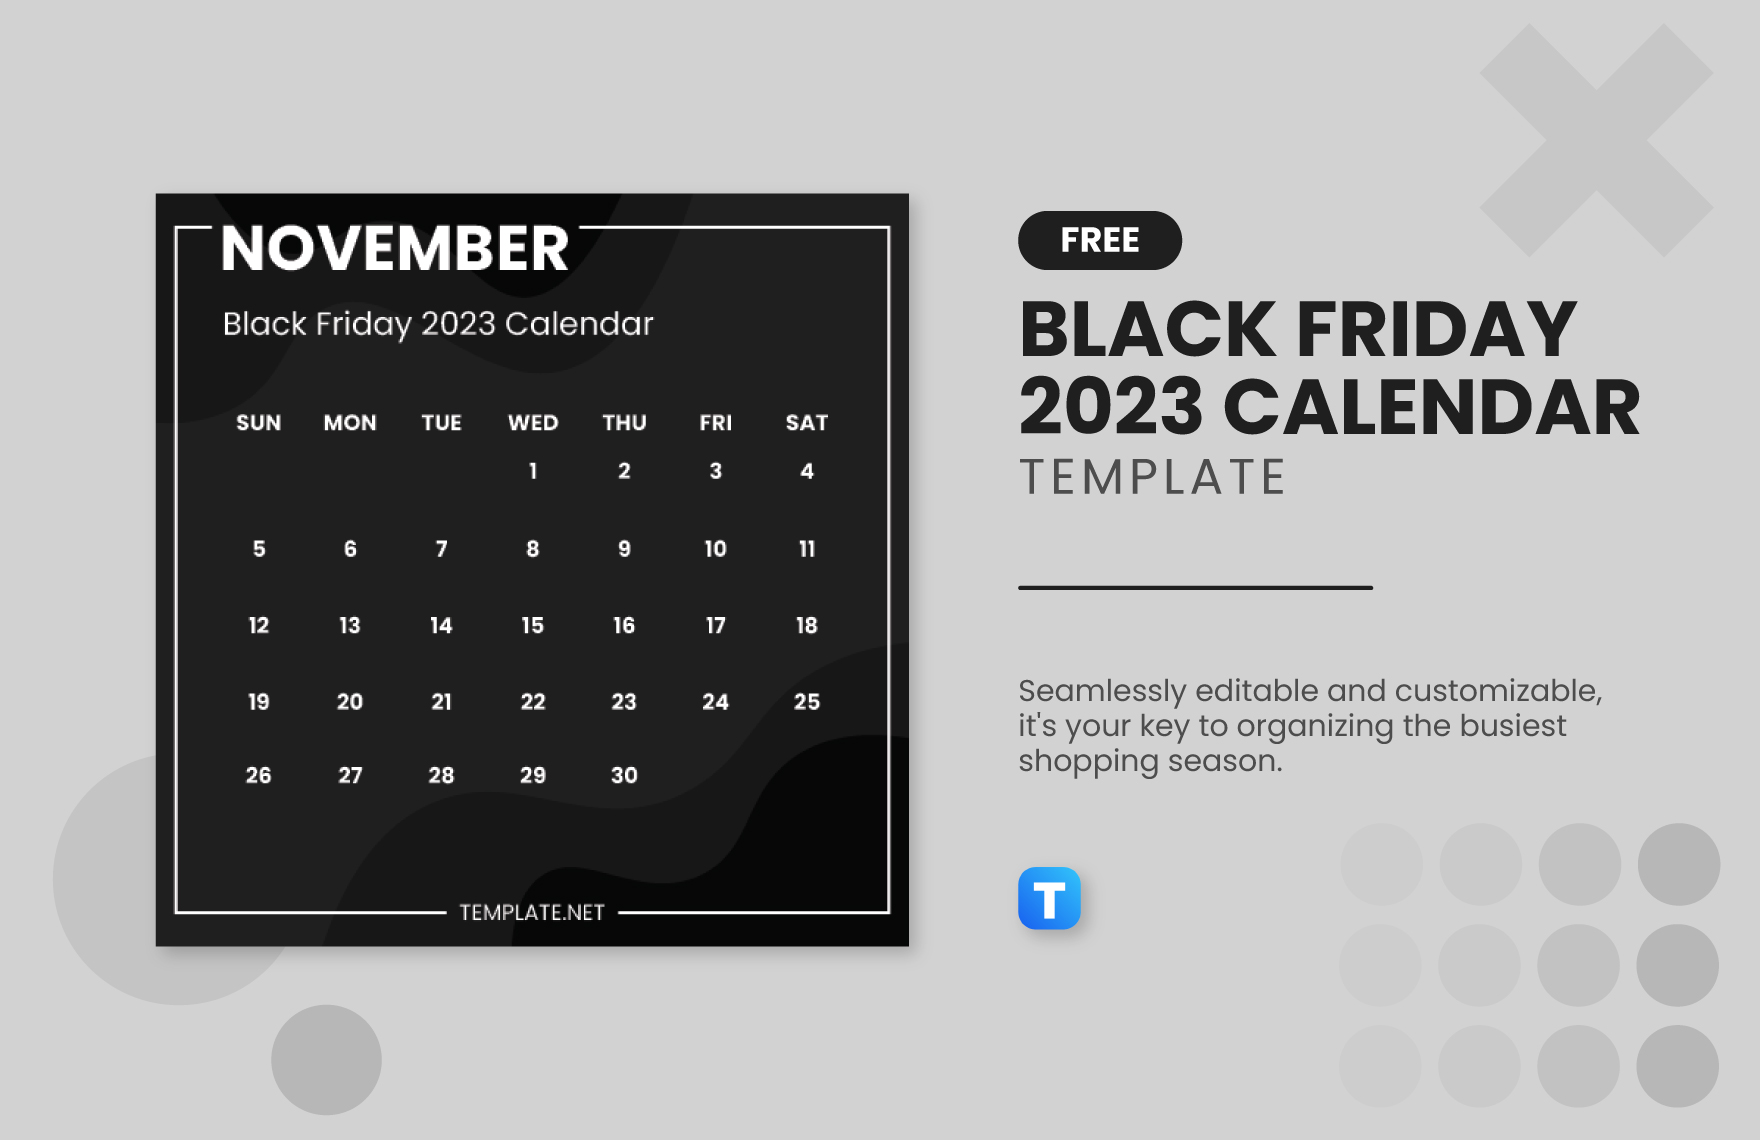 Black Friday 2023 Calendar